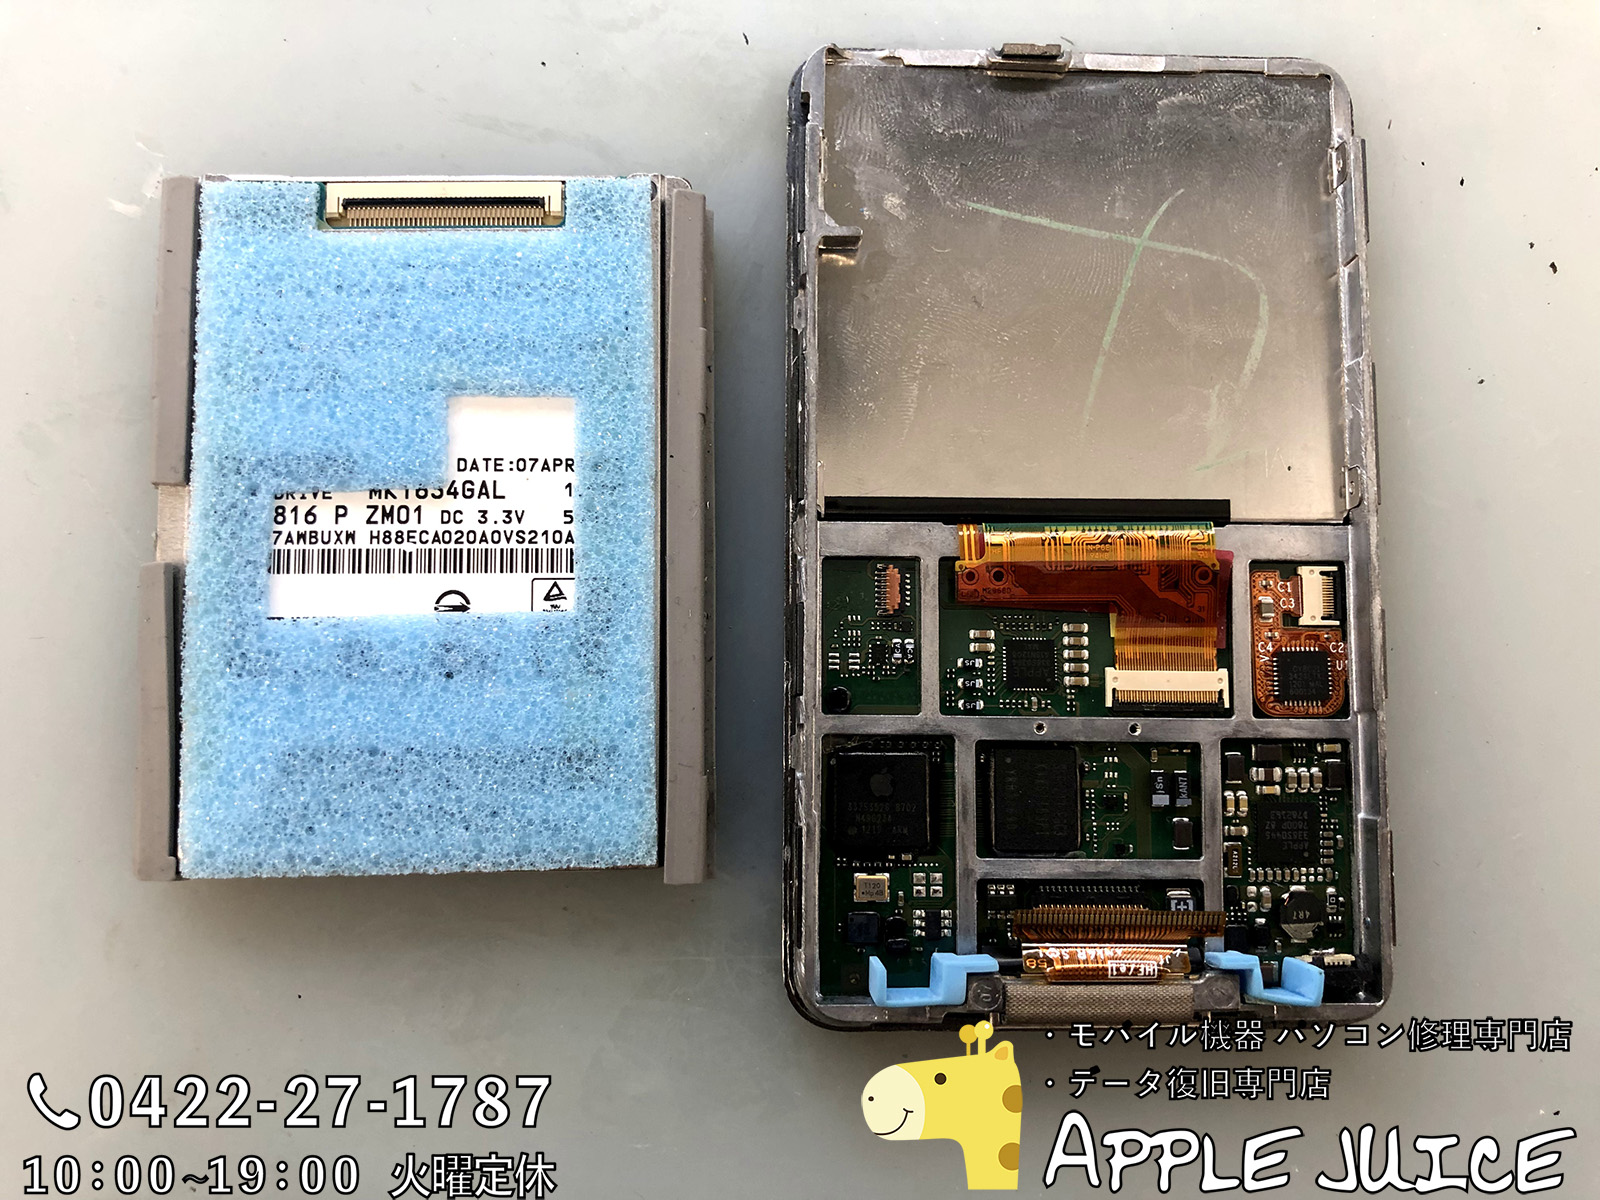 Ipod Classic アイポッドクラシック の基板 基盤 修理 自己分解で 起動不良のipodもapplejuiceへ Iphone Ipad Ipod Mac修理 データ復旧 基板修理 Applejuice吉祥寺店